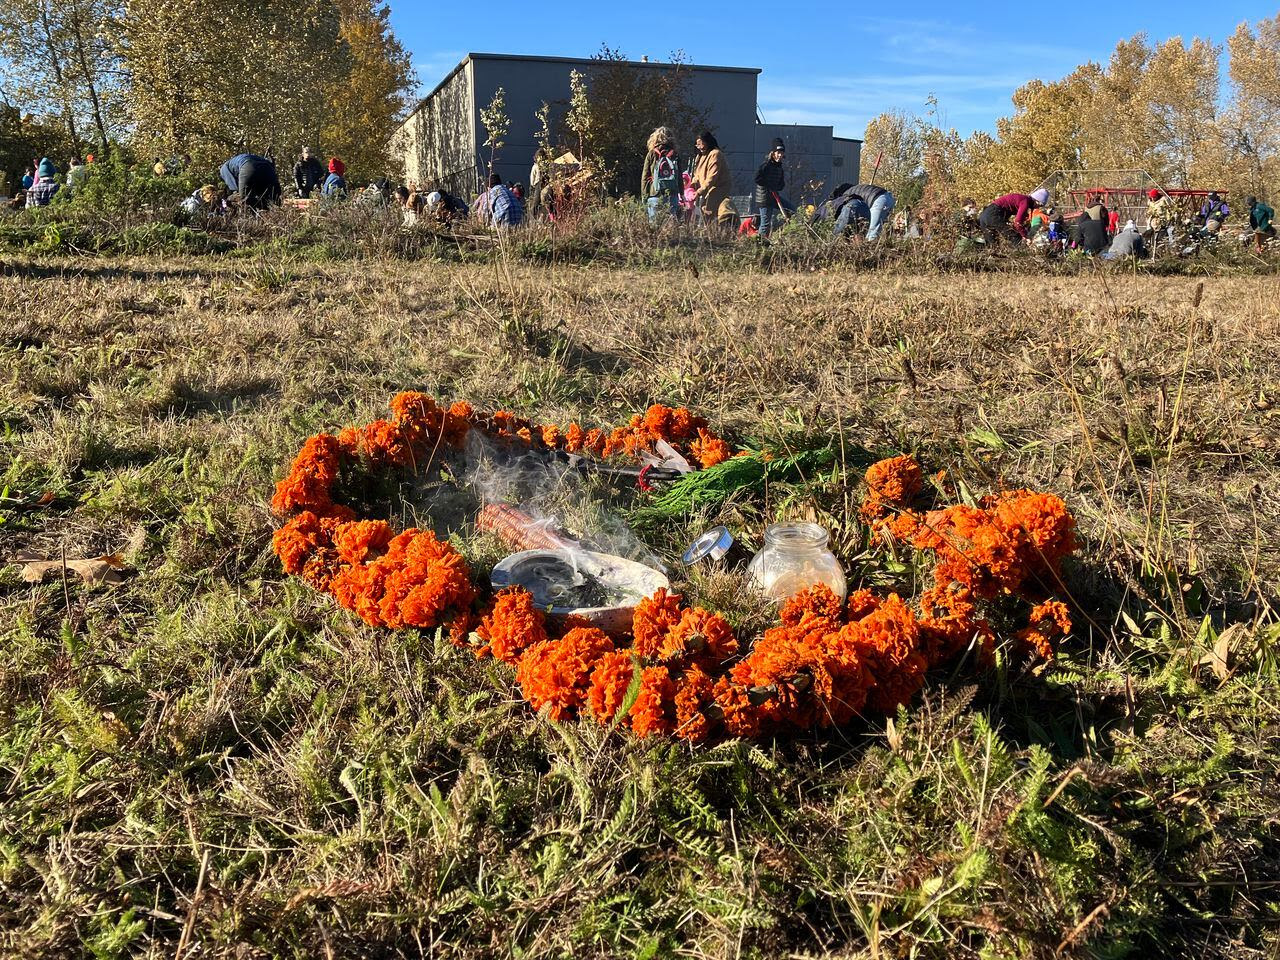 ‘An effort towards healing’: Hundreds gather at Portland Native American community garden for Un-Thanksgiving